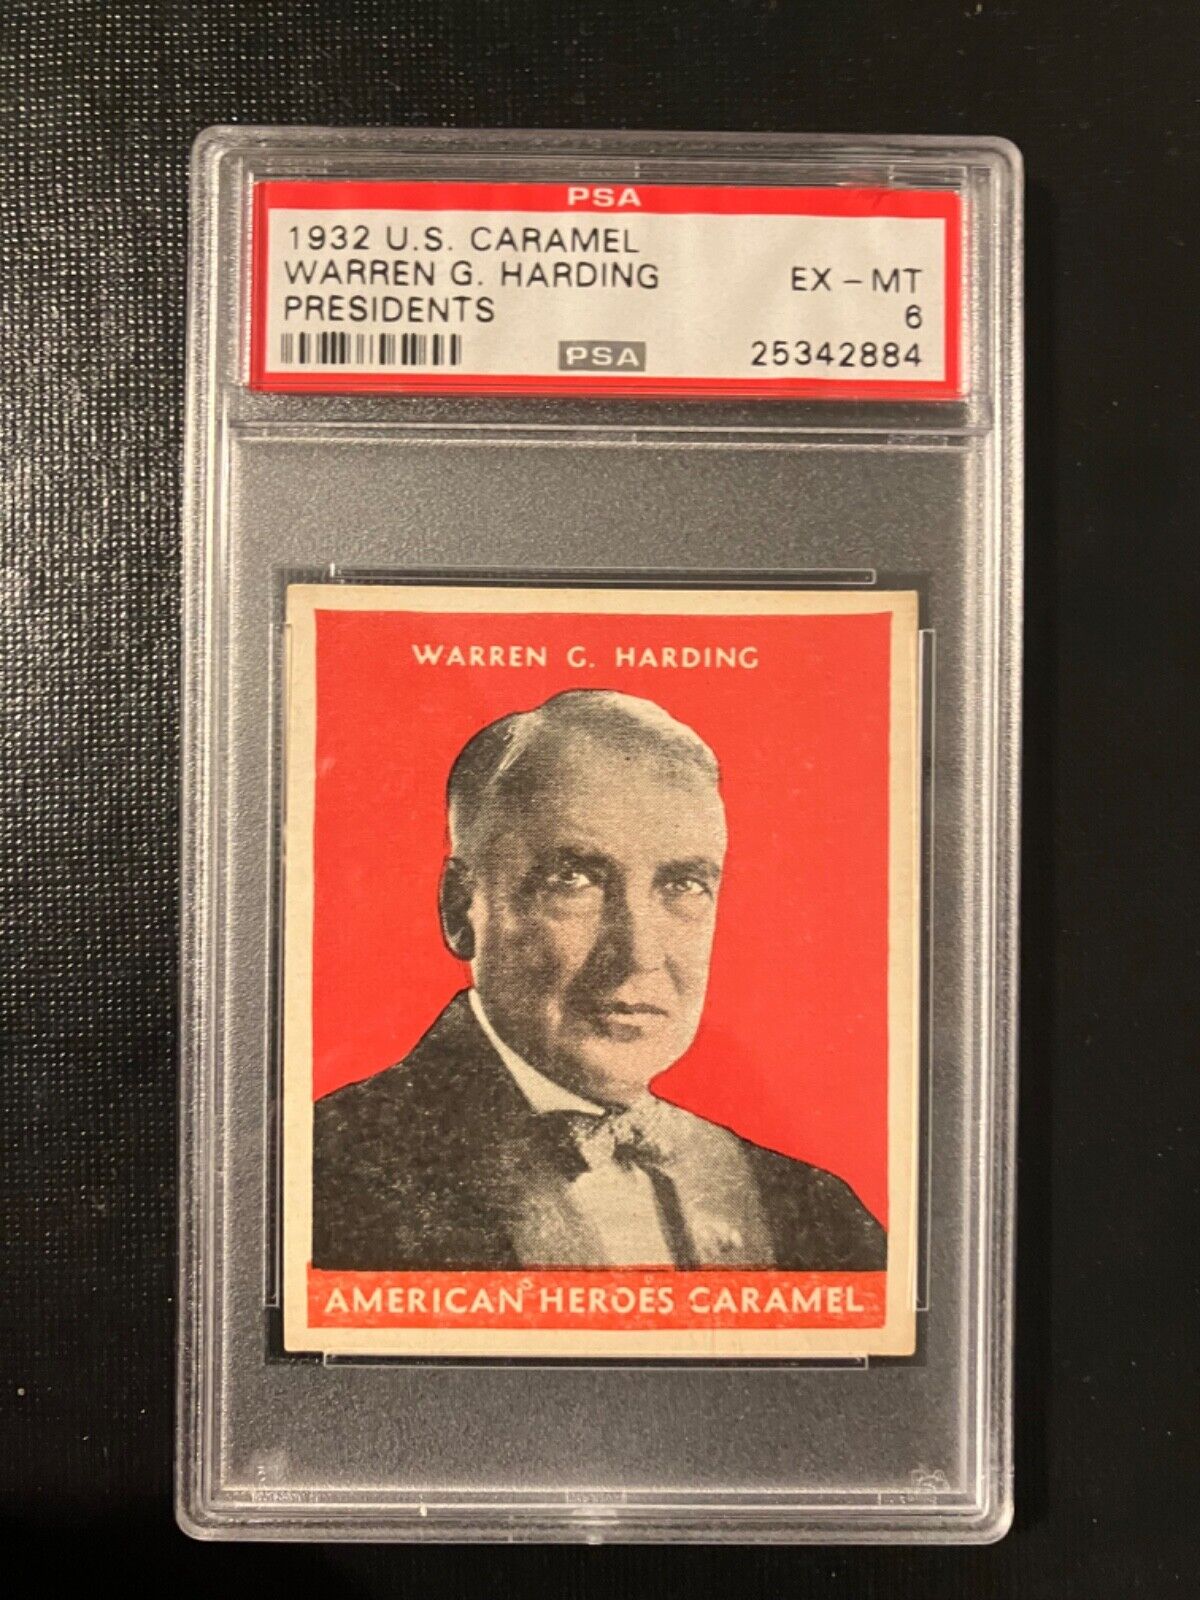 1932 US Caramel Presidents Warren Harding PSA 6